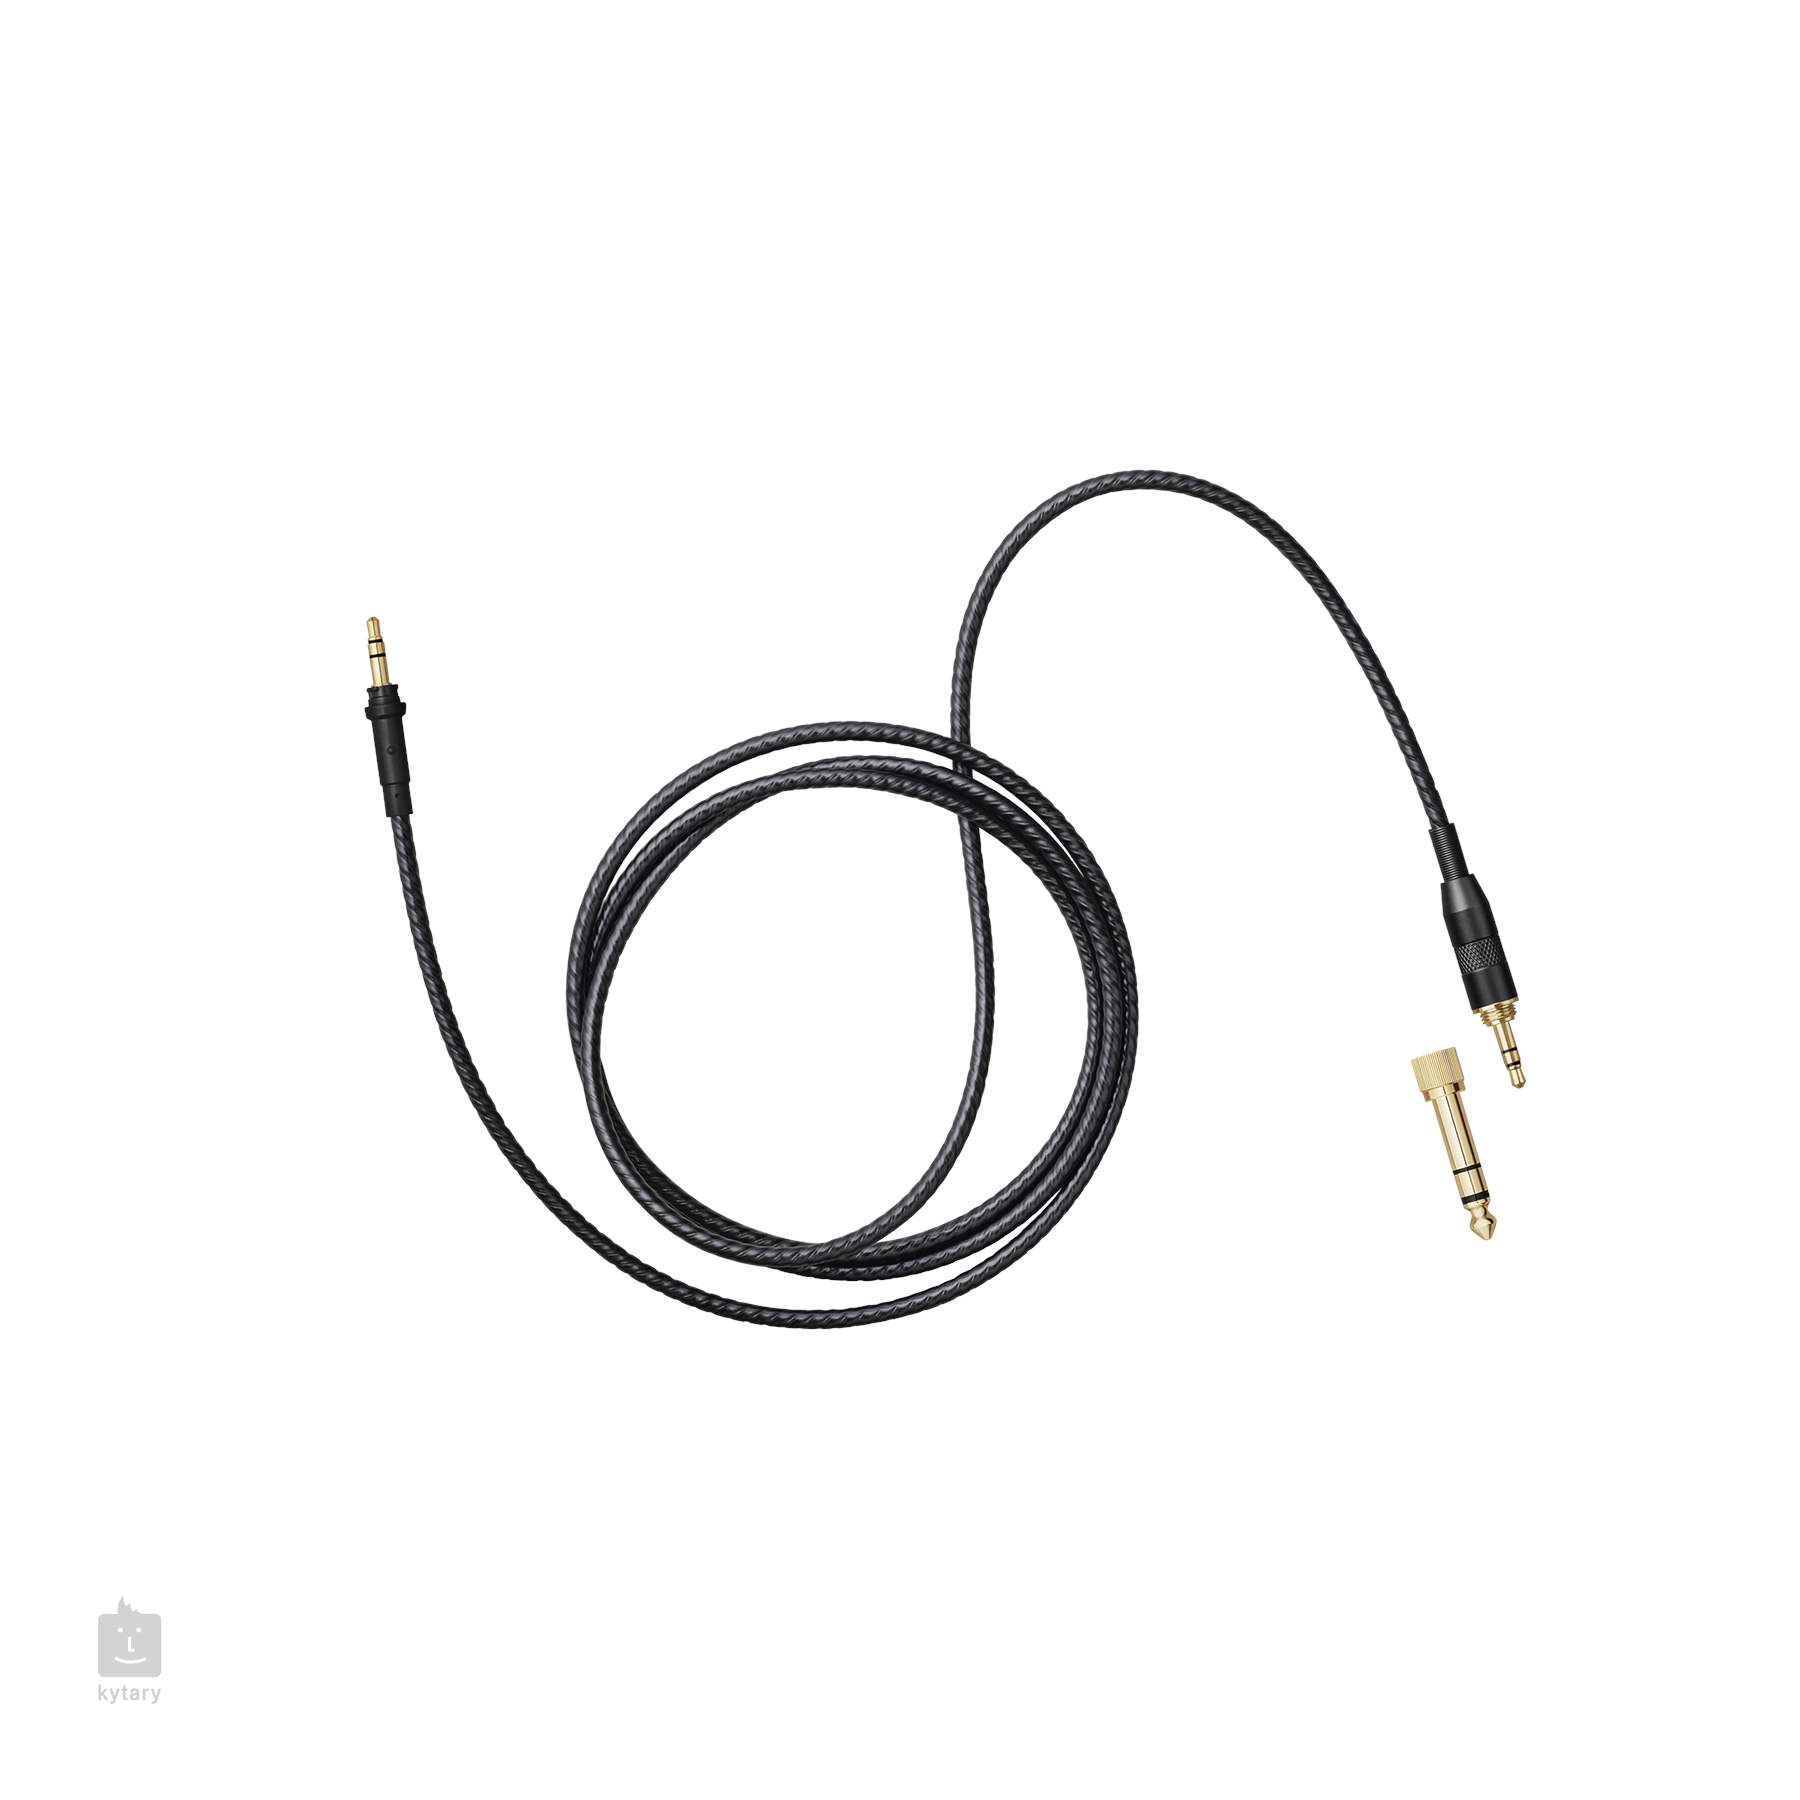 Triad Hi Fi Headphone Cable